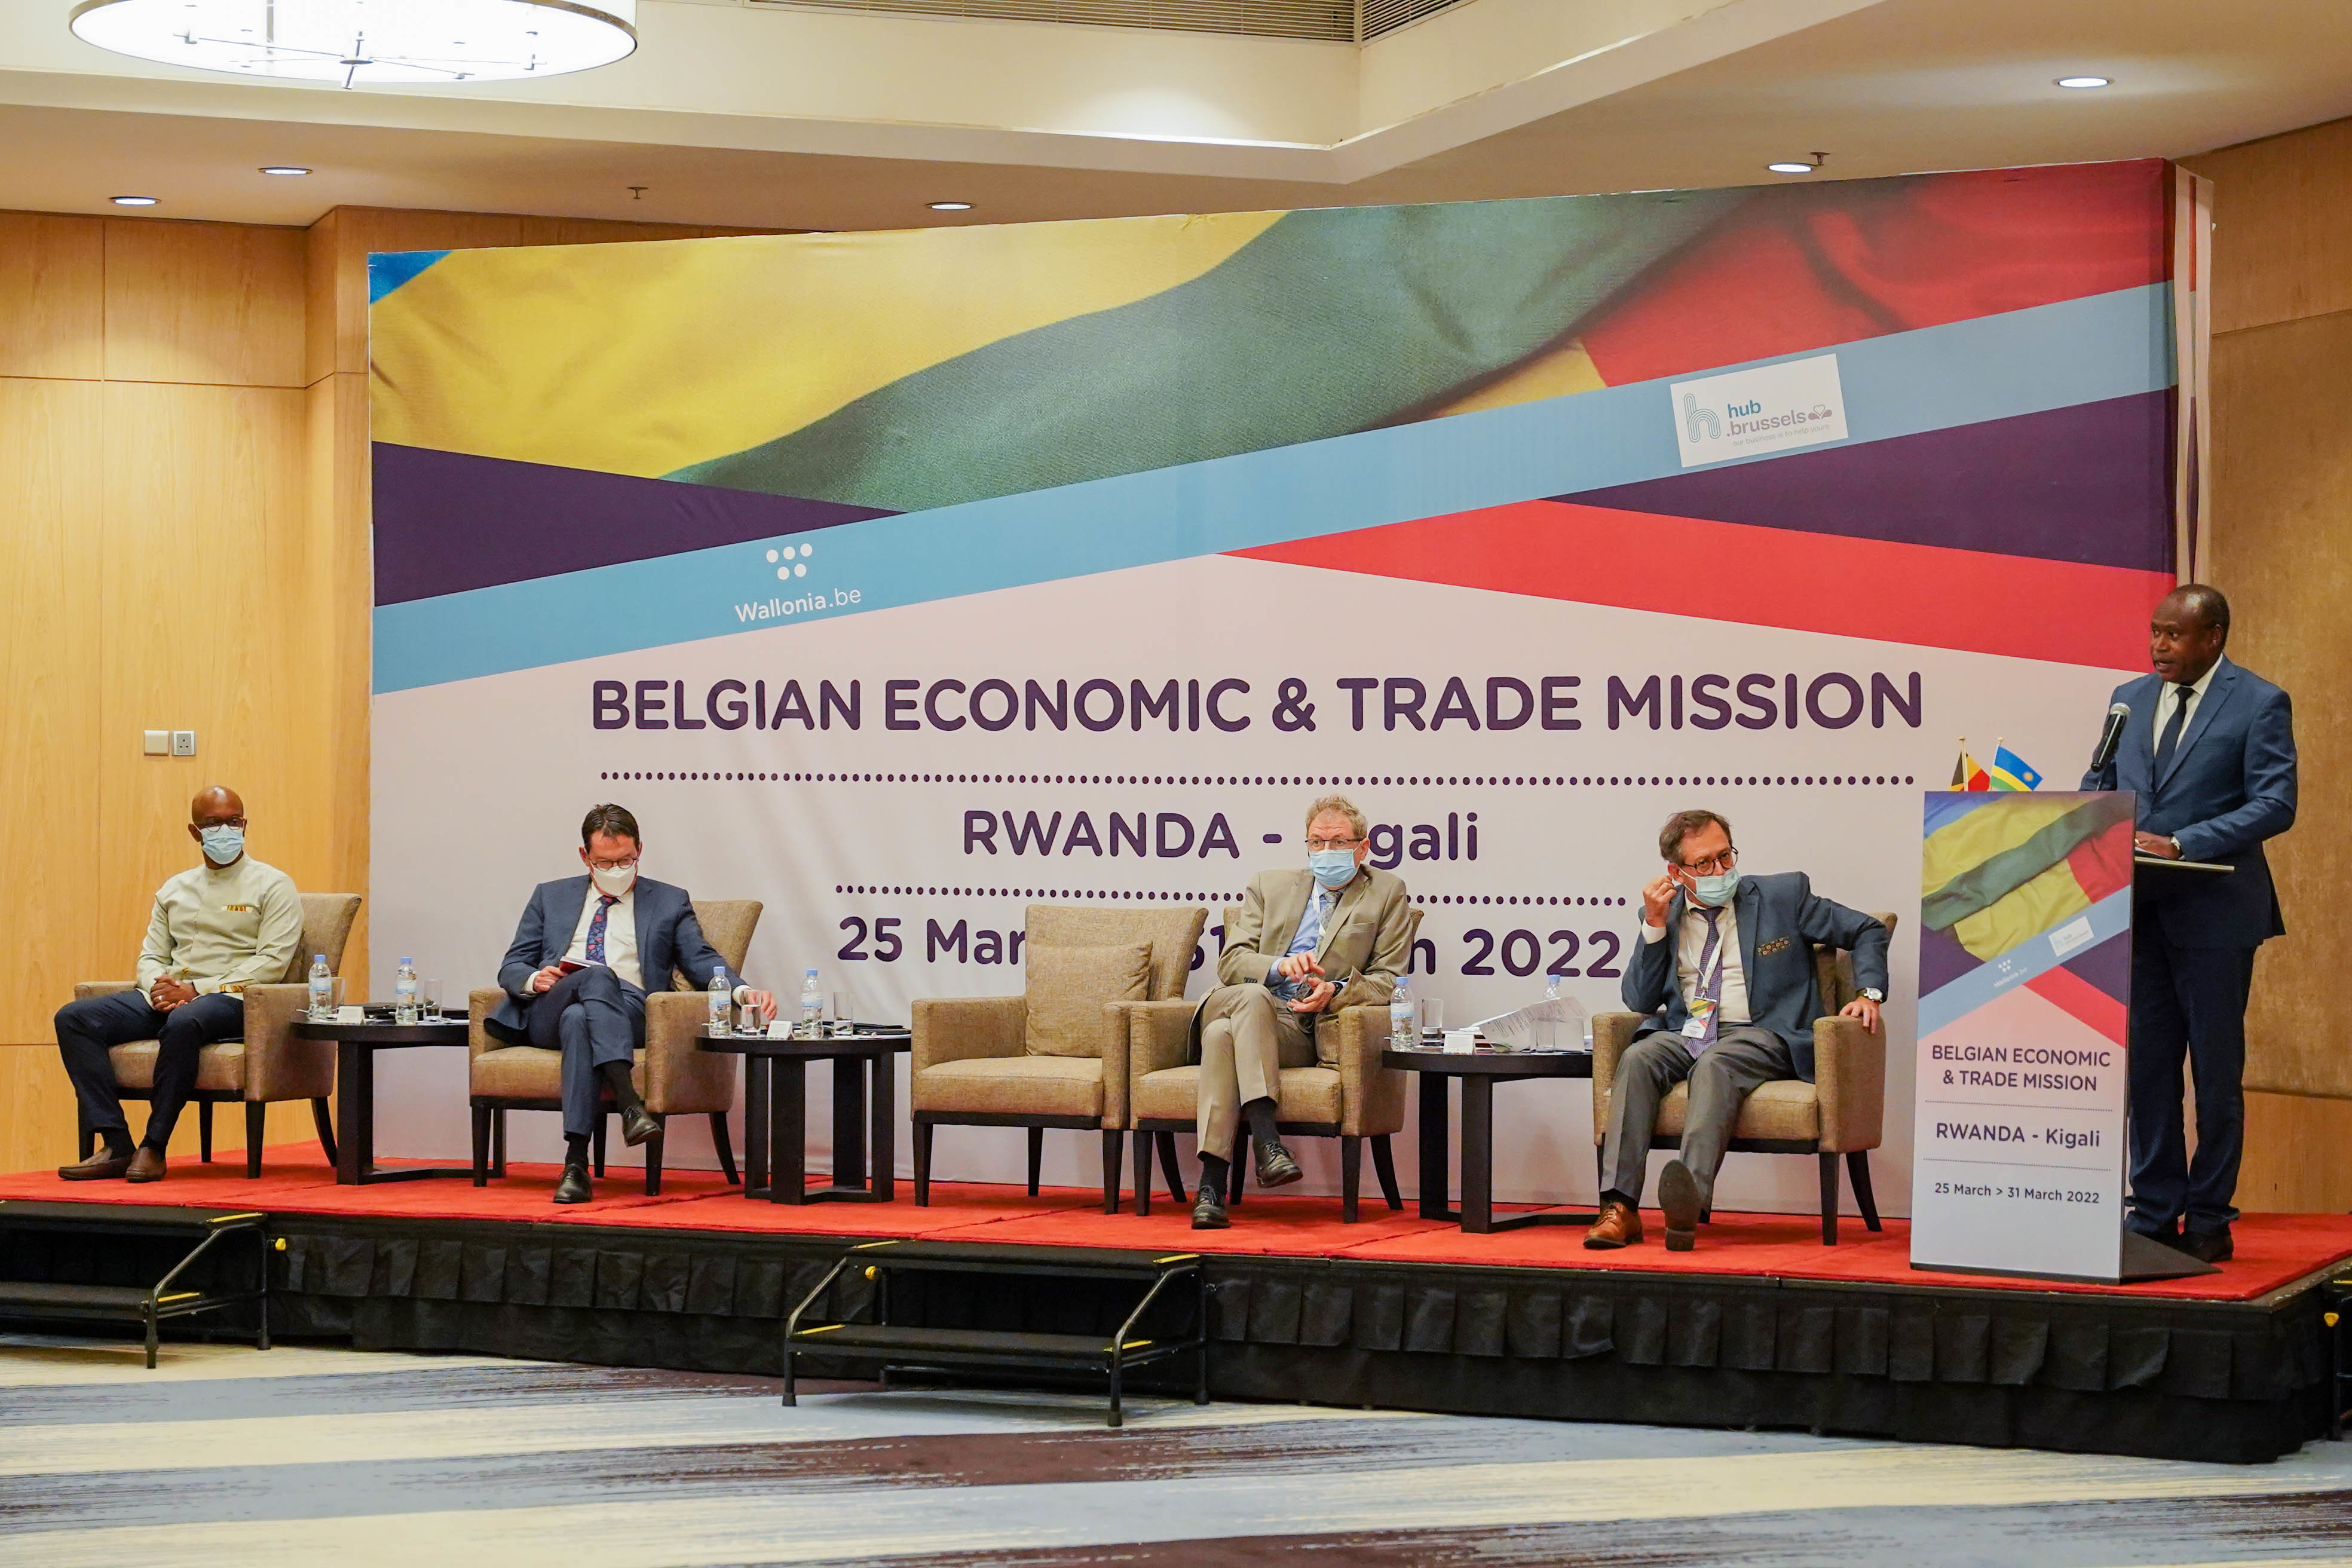 Minister of Finanace and Economic Planning Uzziel Ndagijimana addresses  the  Belgian Economic and Trade Mission in Kigali on March 28, 2022. Dan Nsengiyumva